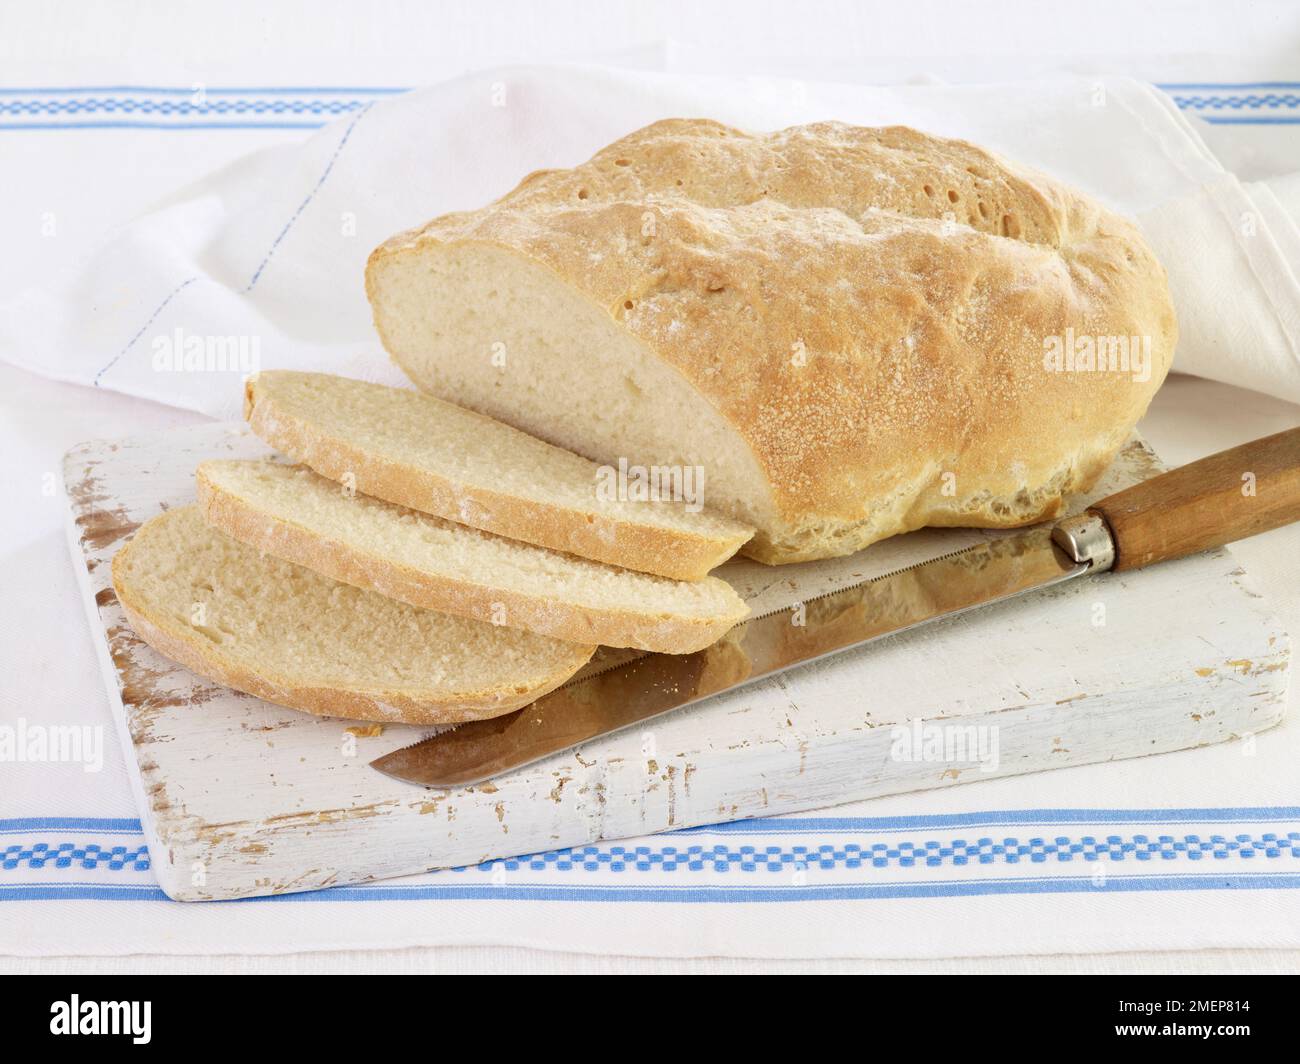 https://c8.alamy.com/comp/2MEP814/sliced-pugliese-bread-on-wooden-chopping-board-with-bread-knife-2MEP814.jpg